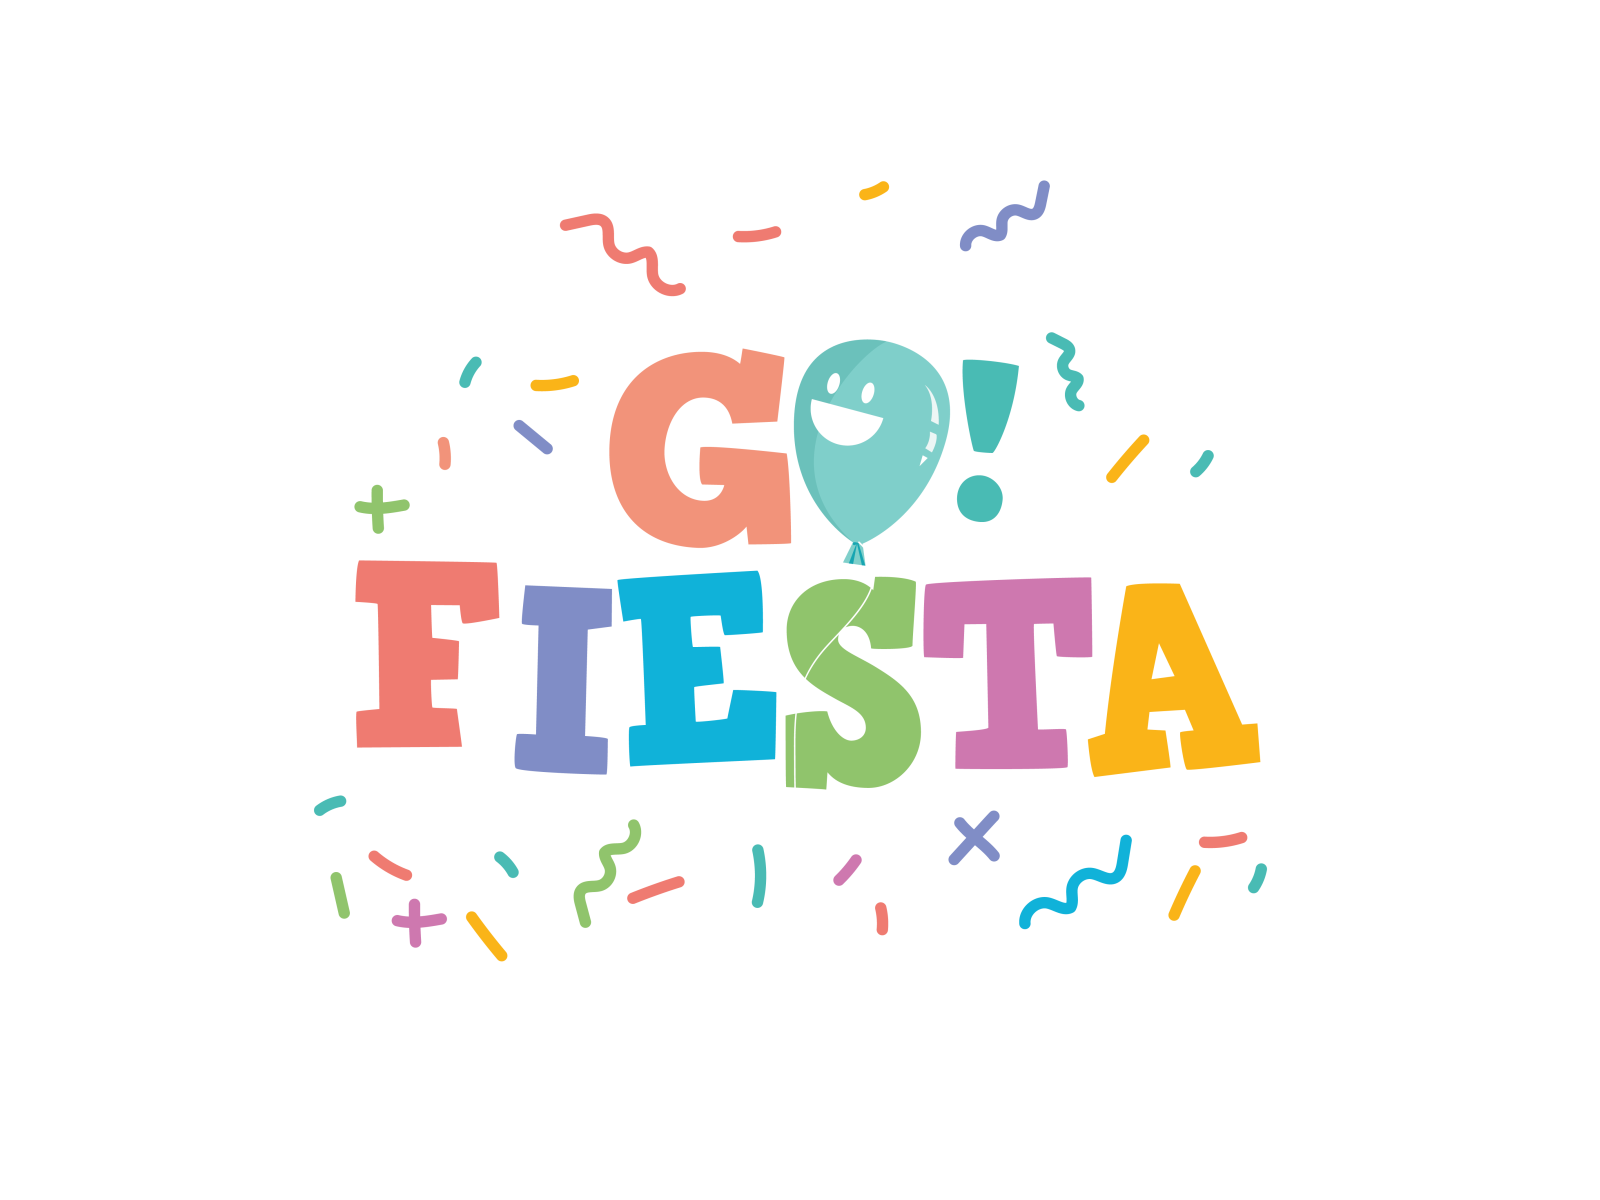 Go Fiesta (mix) by alex campusano r on Dribbble